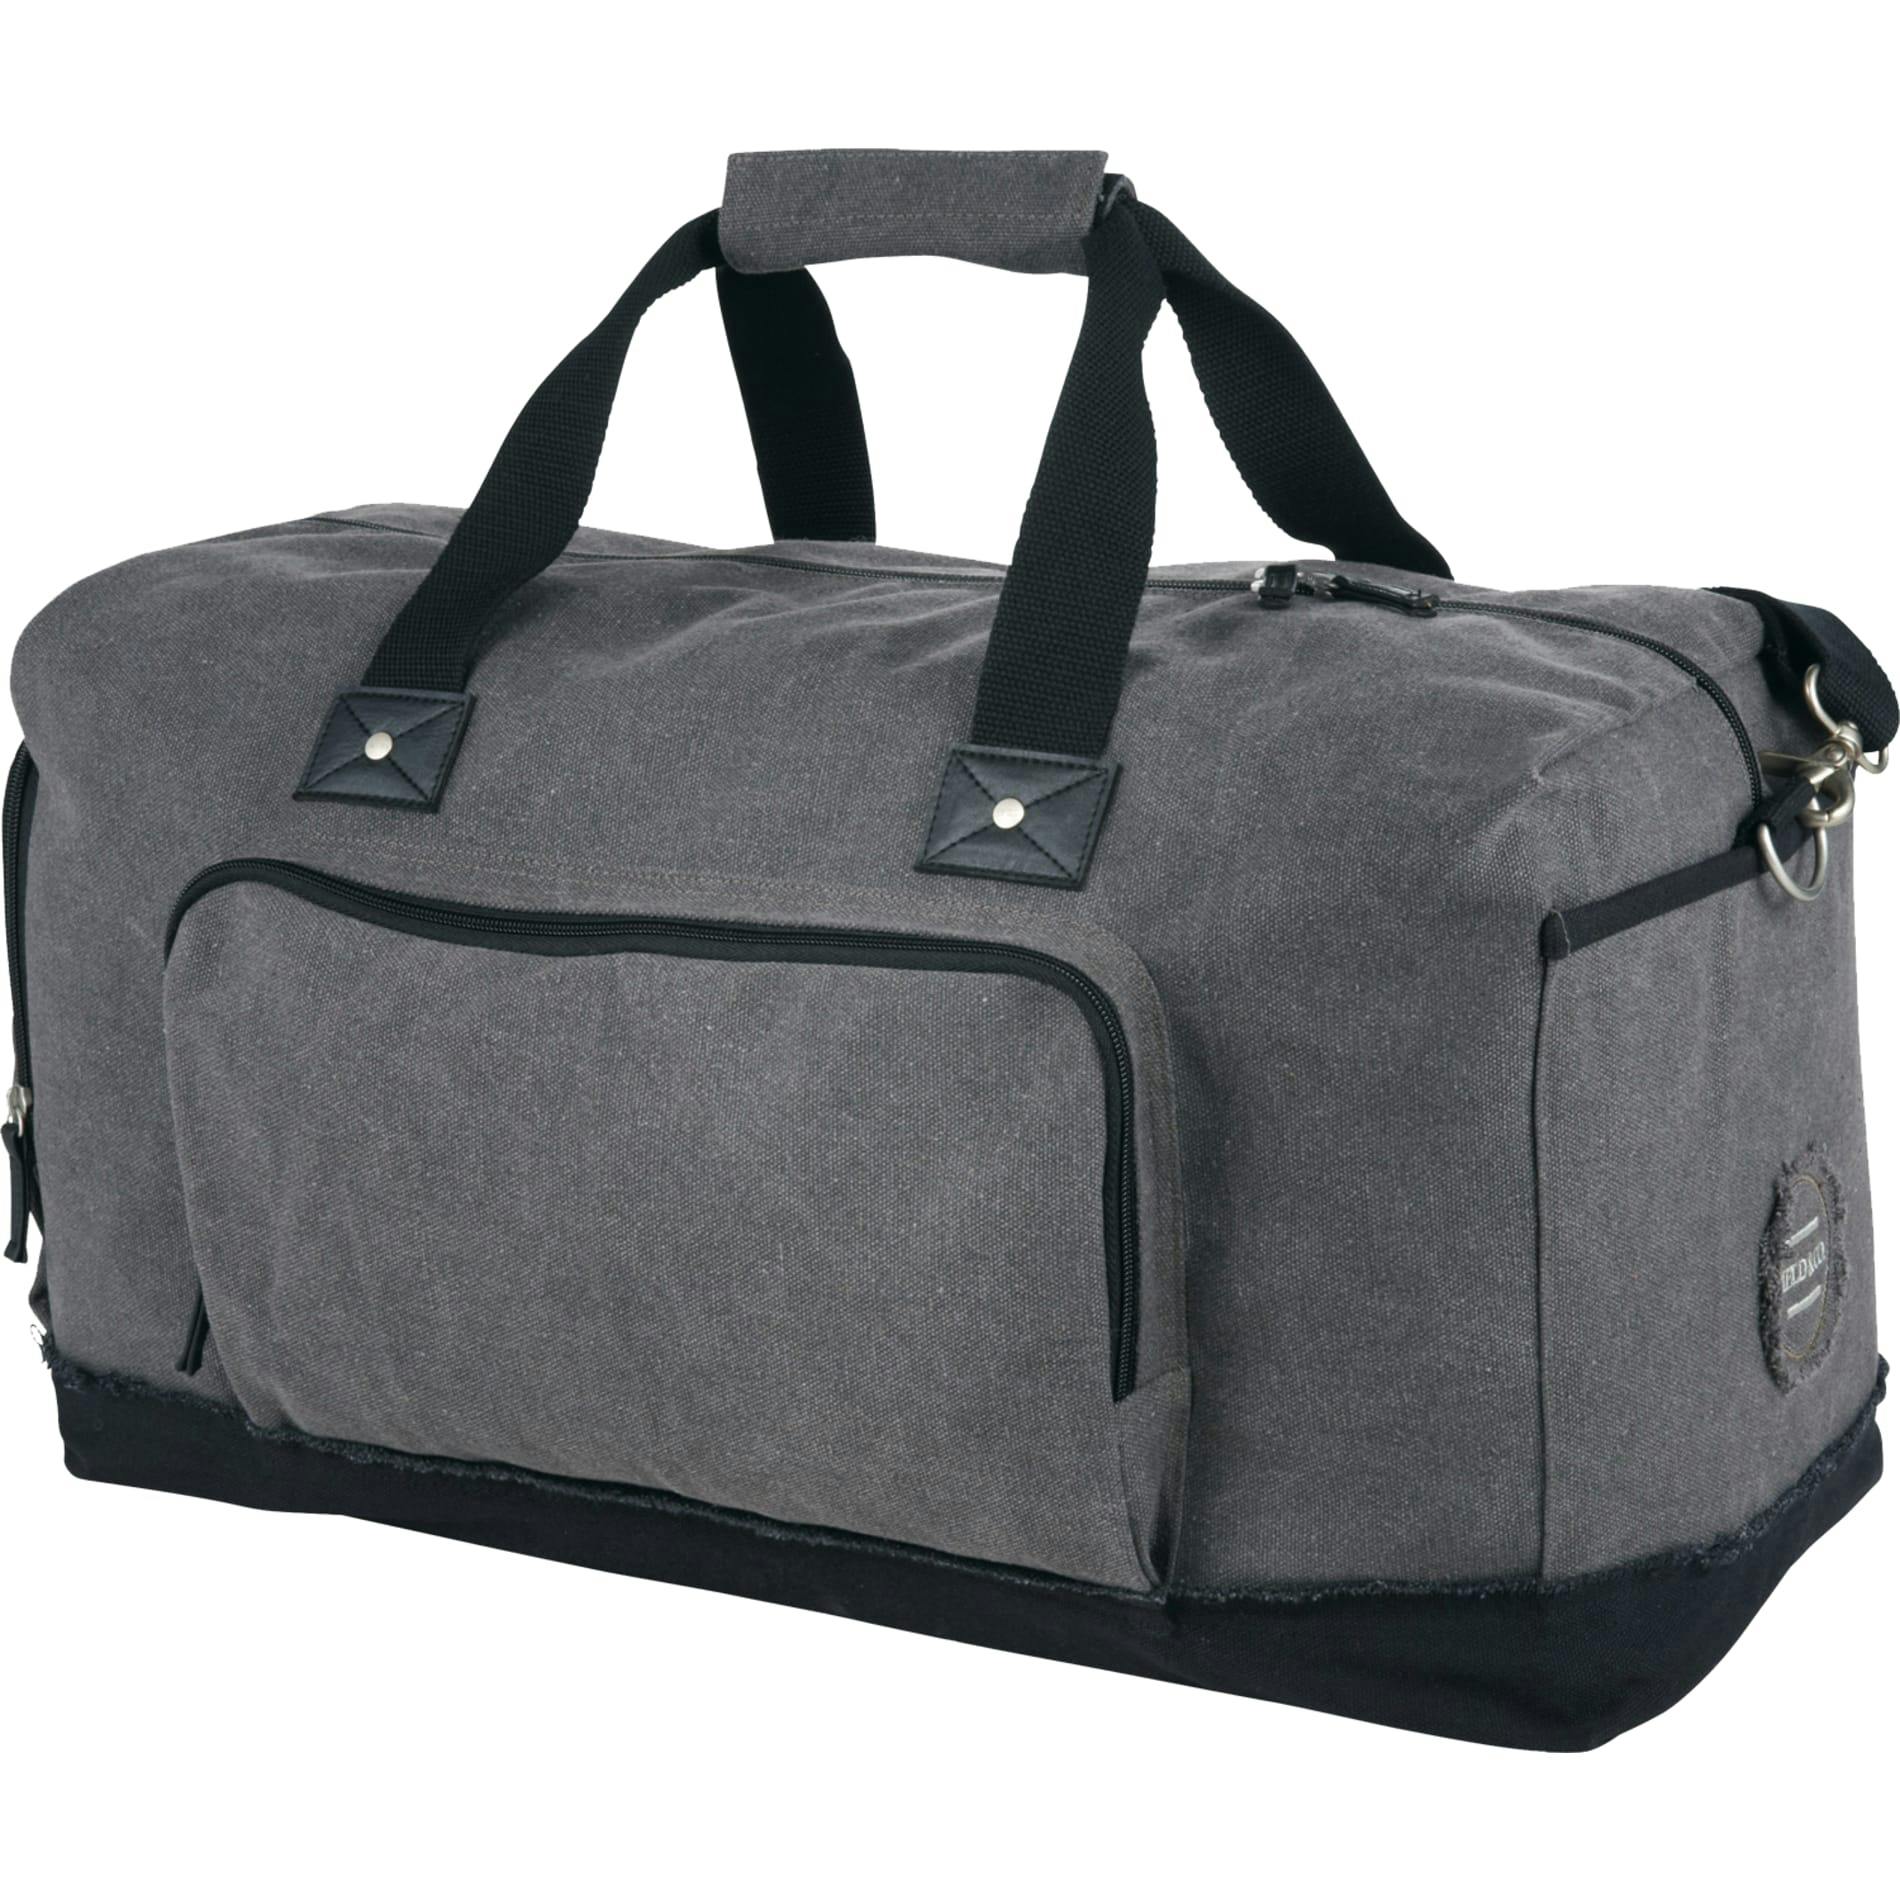 Field & Co.® Hudson 21" Weekender Duffel Bag - additional Image 2